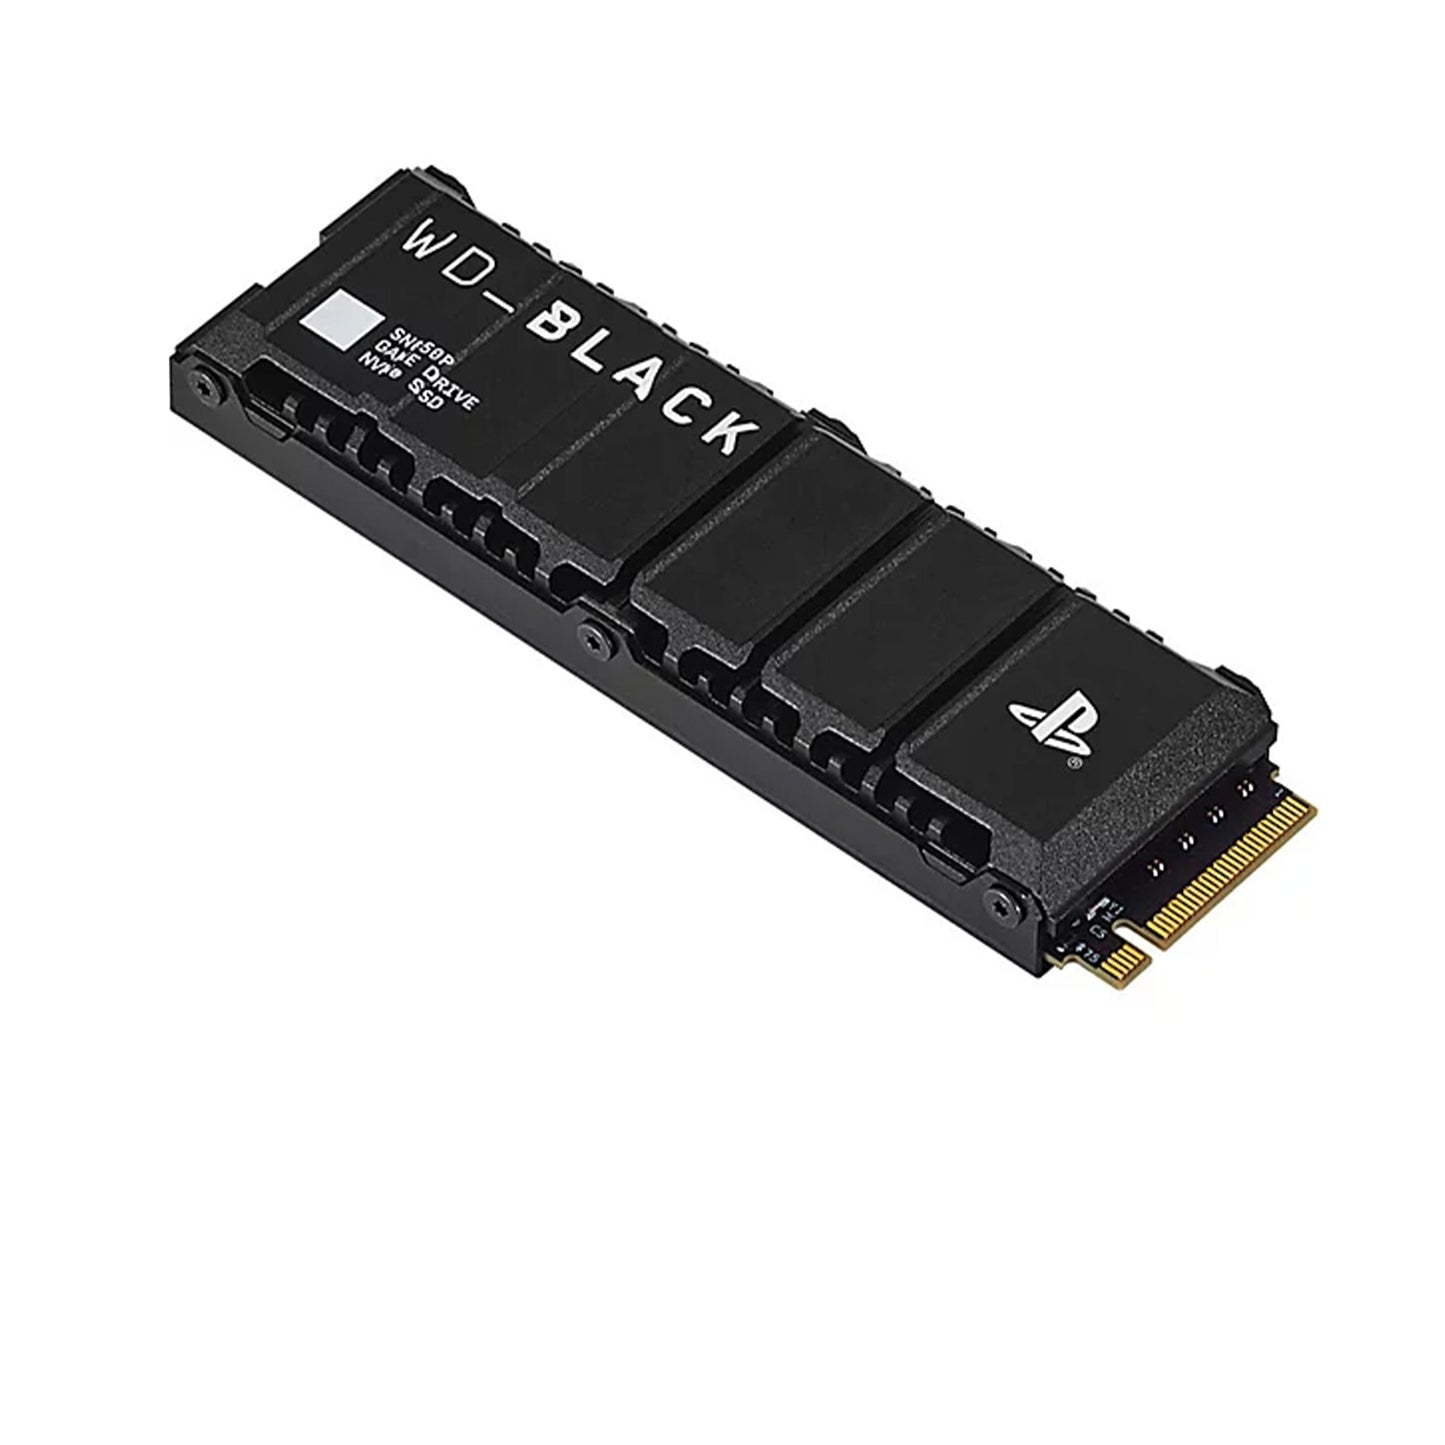 2 تيرابايت WD BLACK™ SN850P NVMe™ SSD لوحدات تحكم PS5™ 